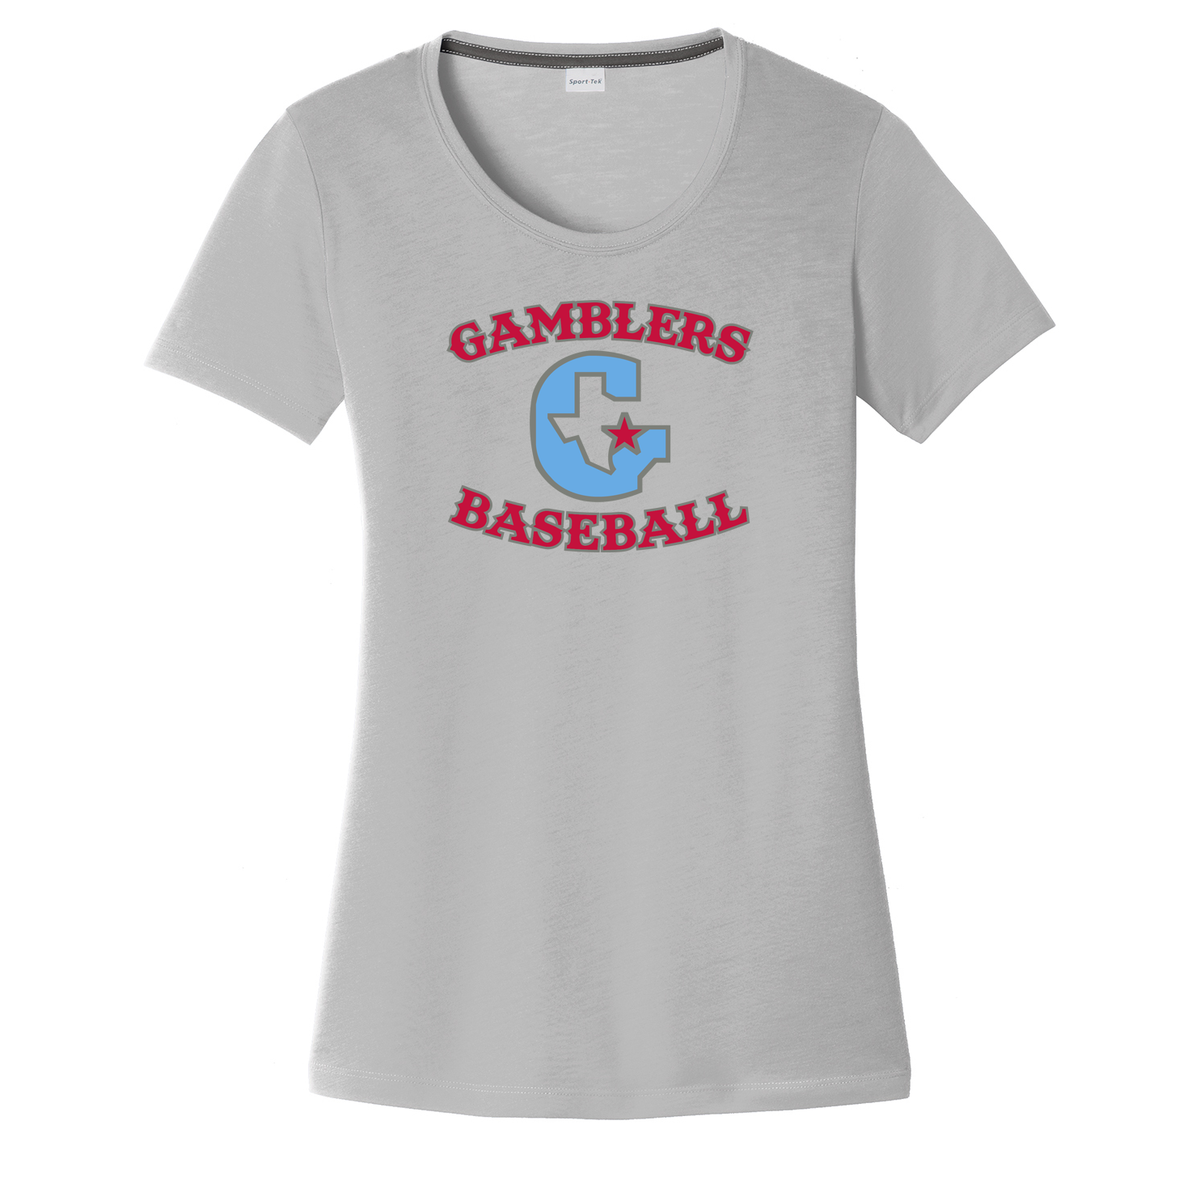 Gamblers Baseball  Women's CottonTouch Performance T-Shirt